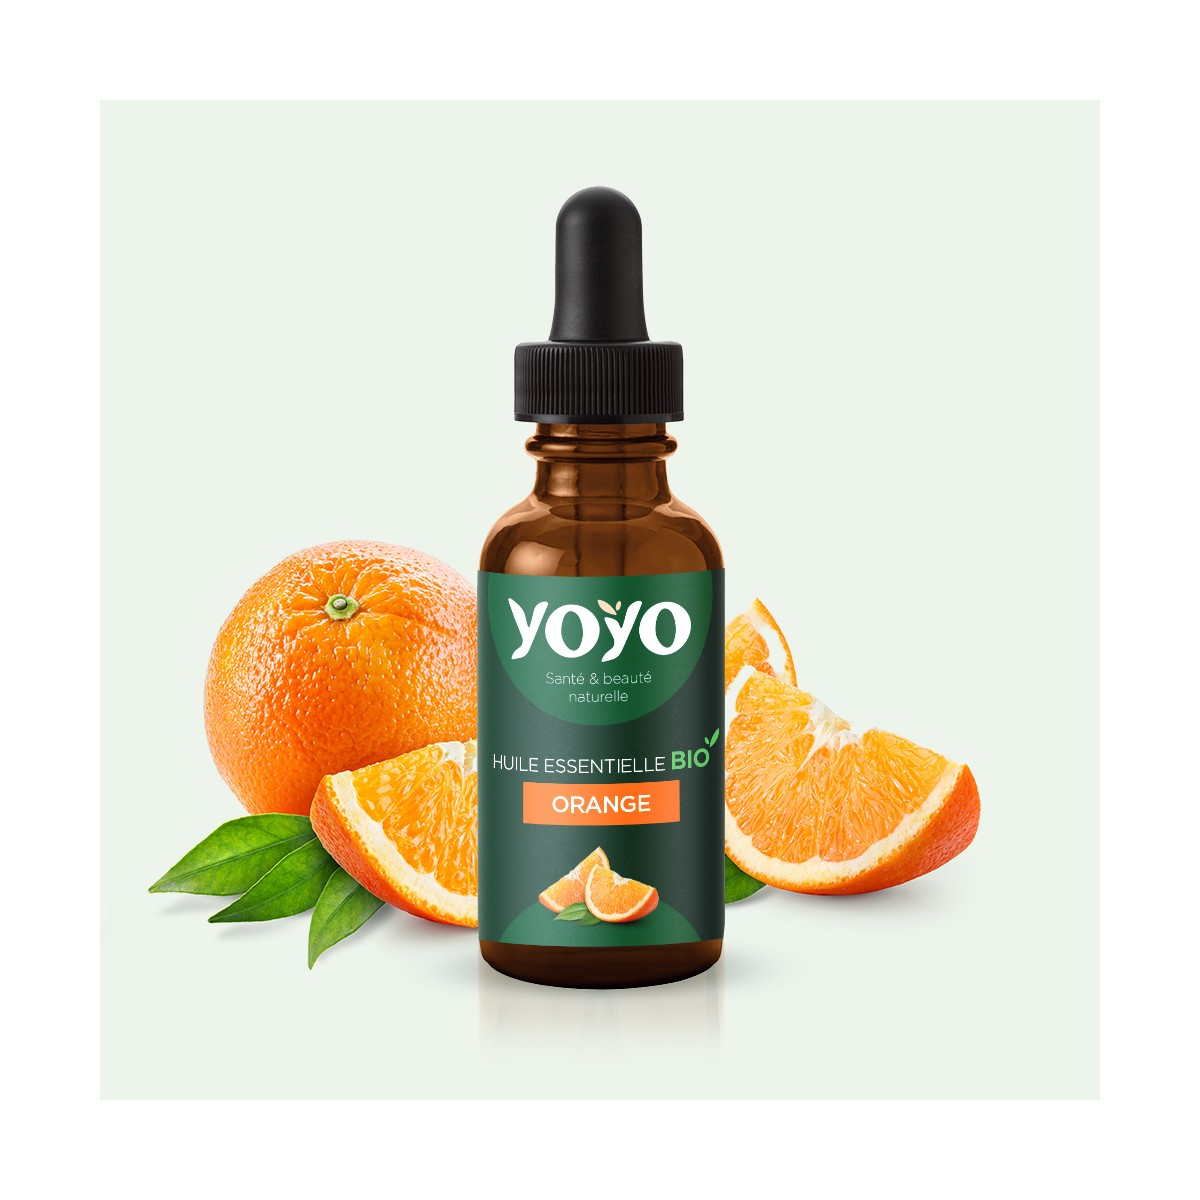 huile essentielle d'orange douce bio 10 ml certifiée pure et naturelle